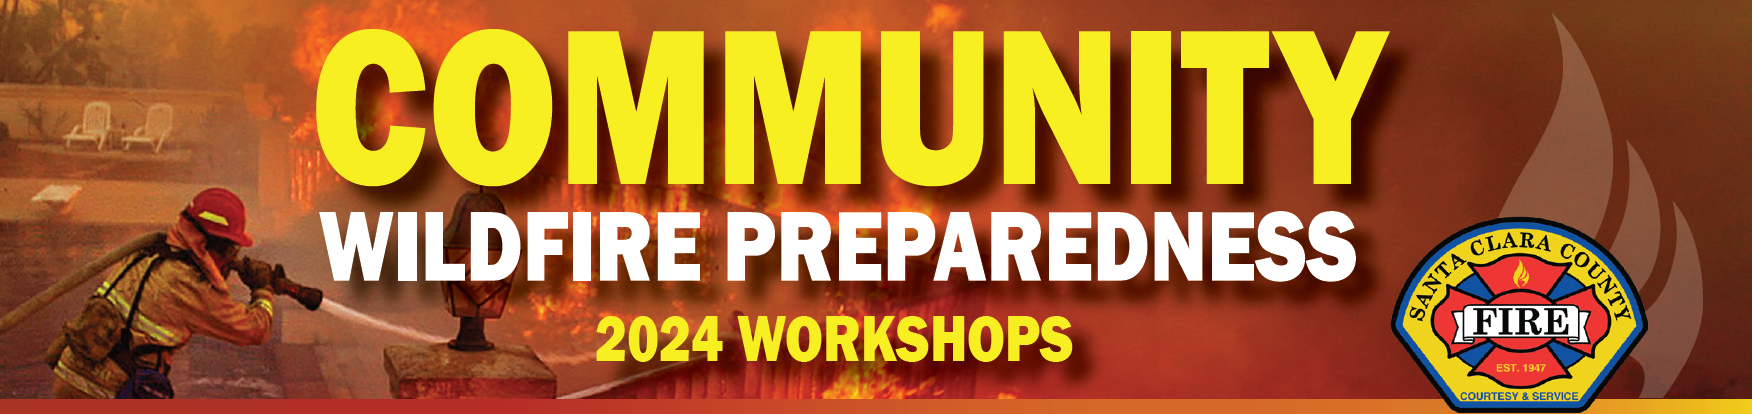 Community-Wildfire-Preparedness-Workshop-Banner.png